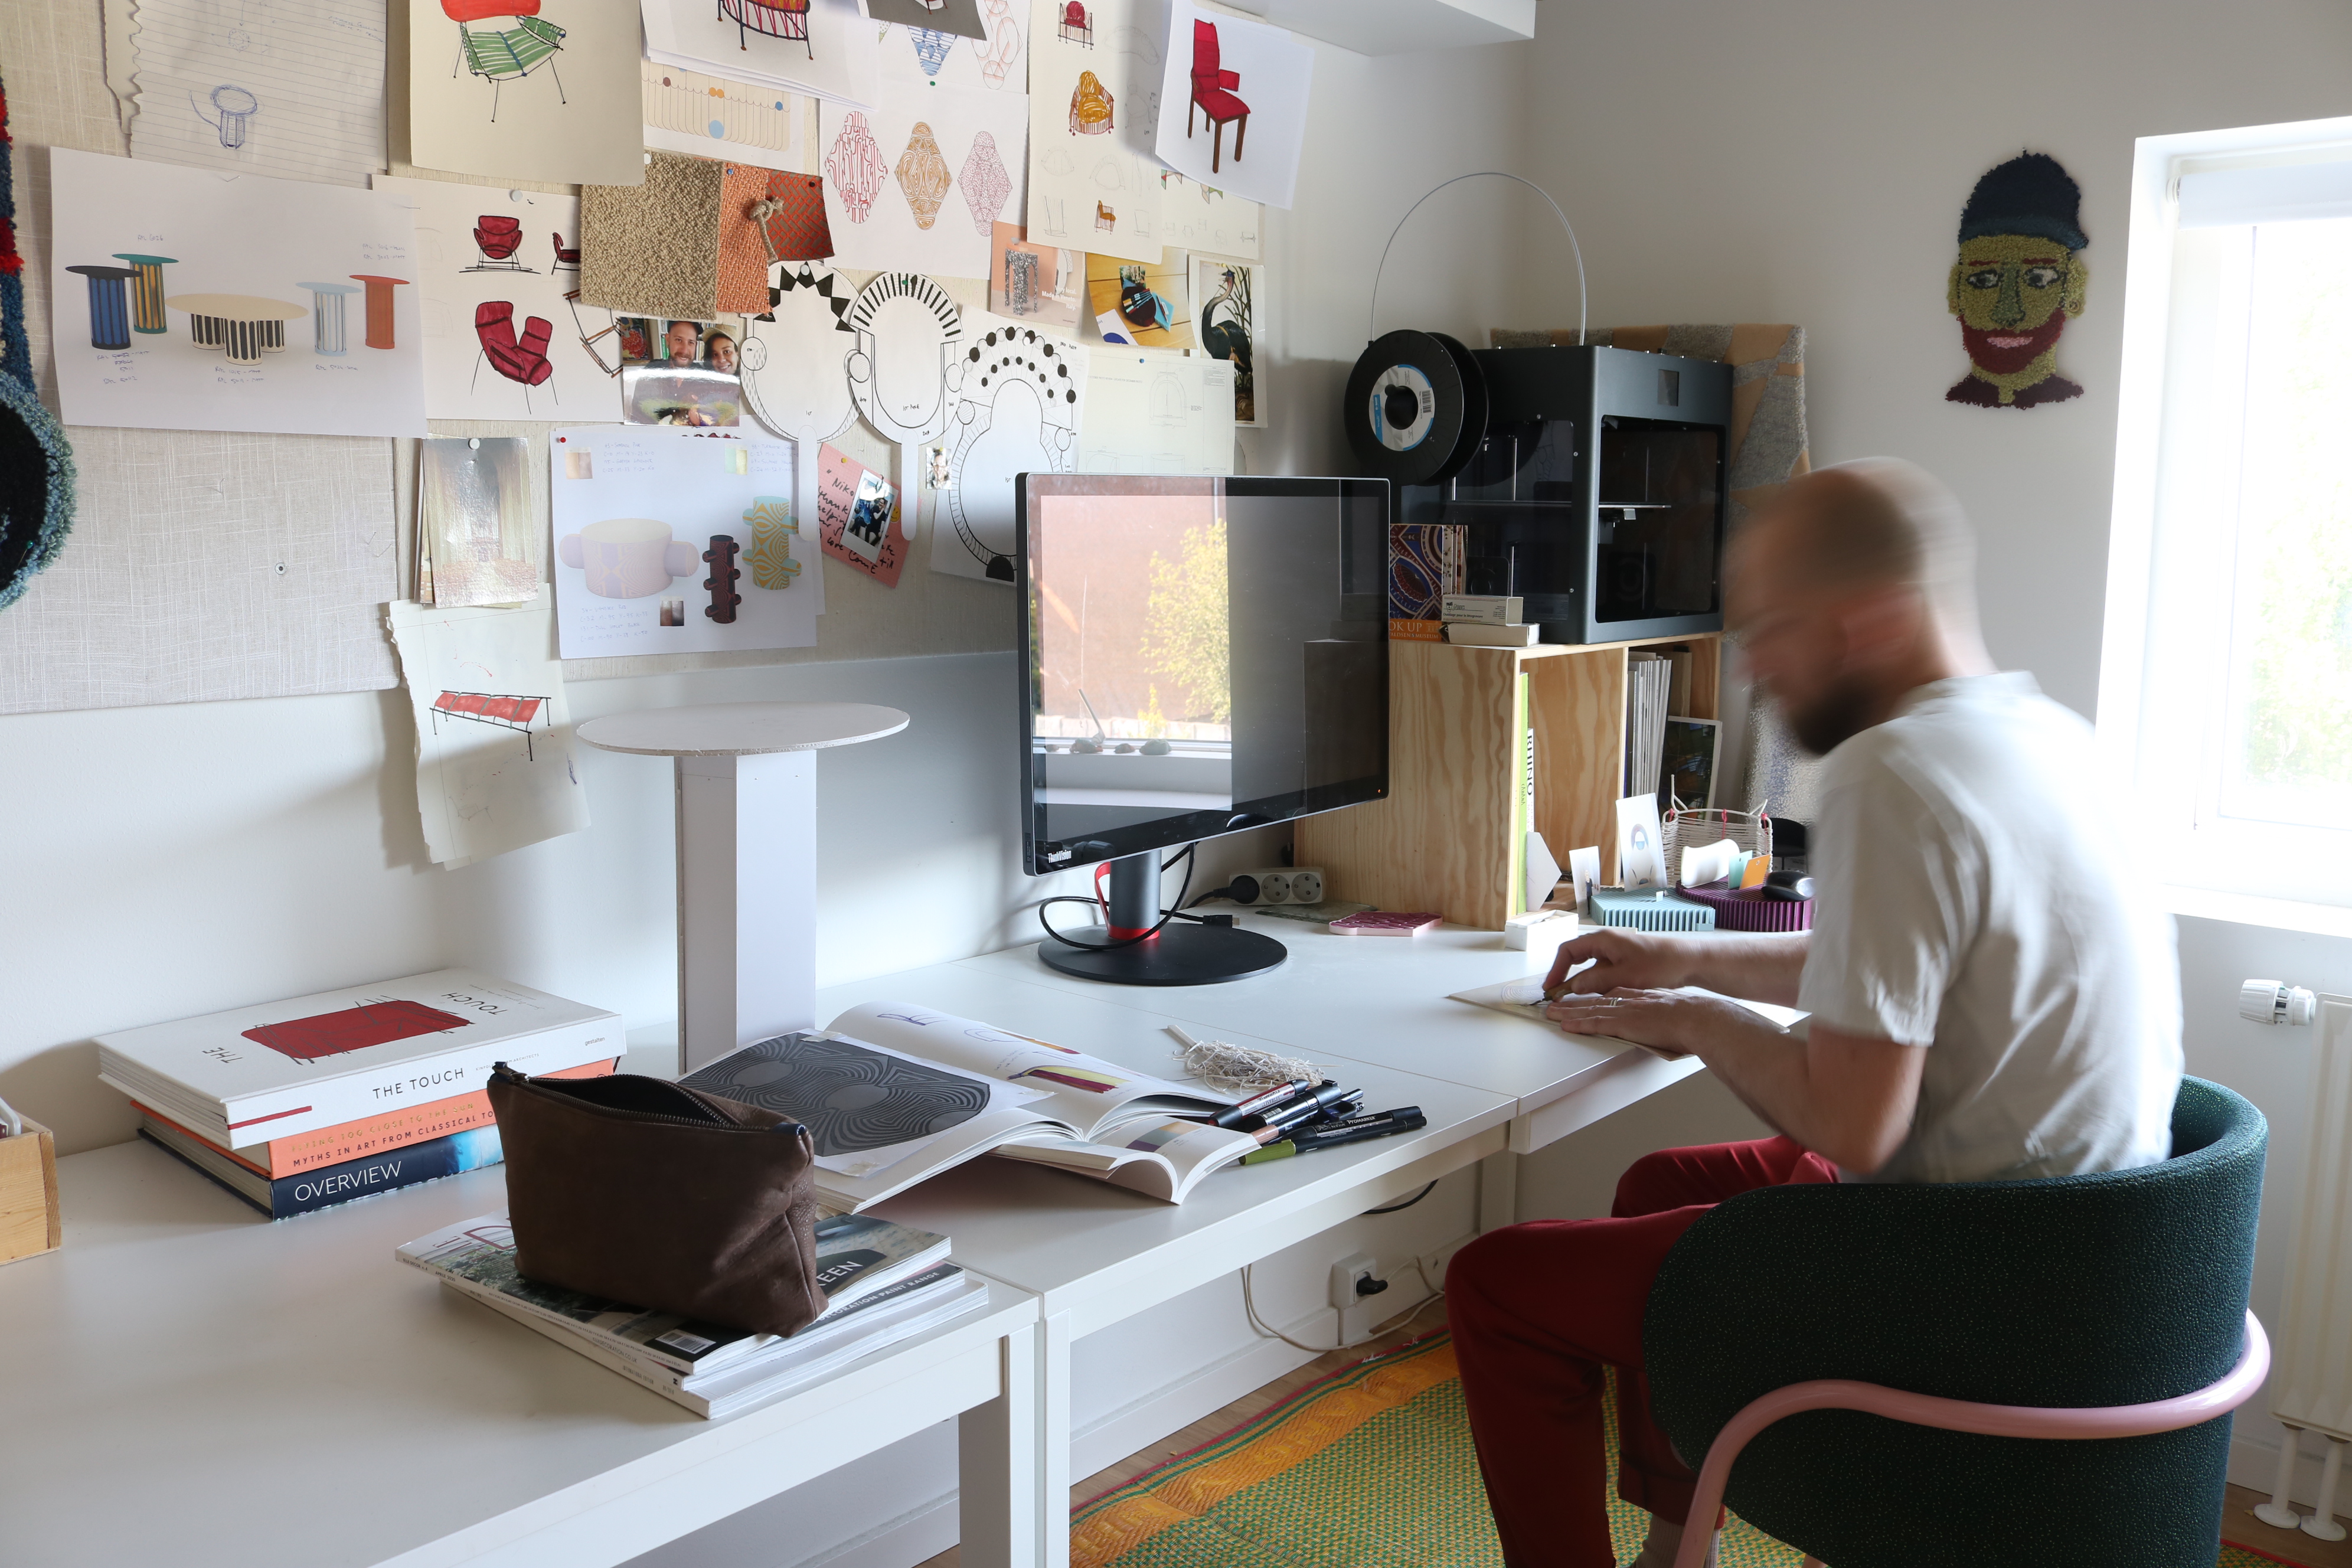 Nikolai's home studio surrounded by sketches and finished works. Photo c/o Nikolai Kotlarczyk.